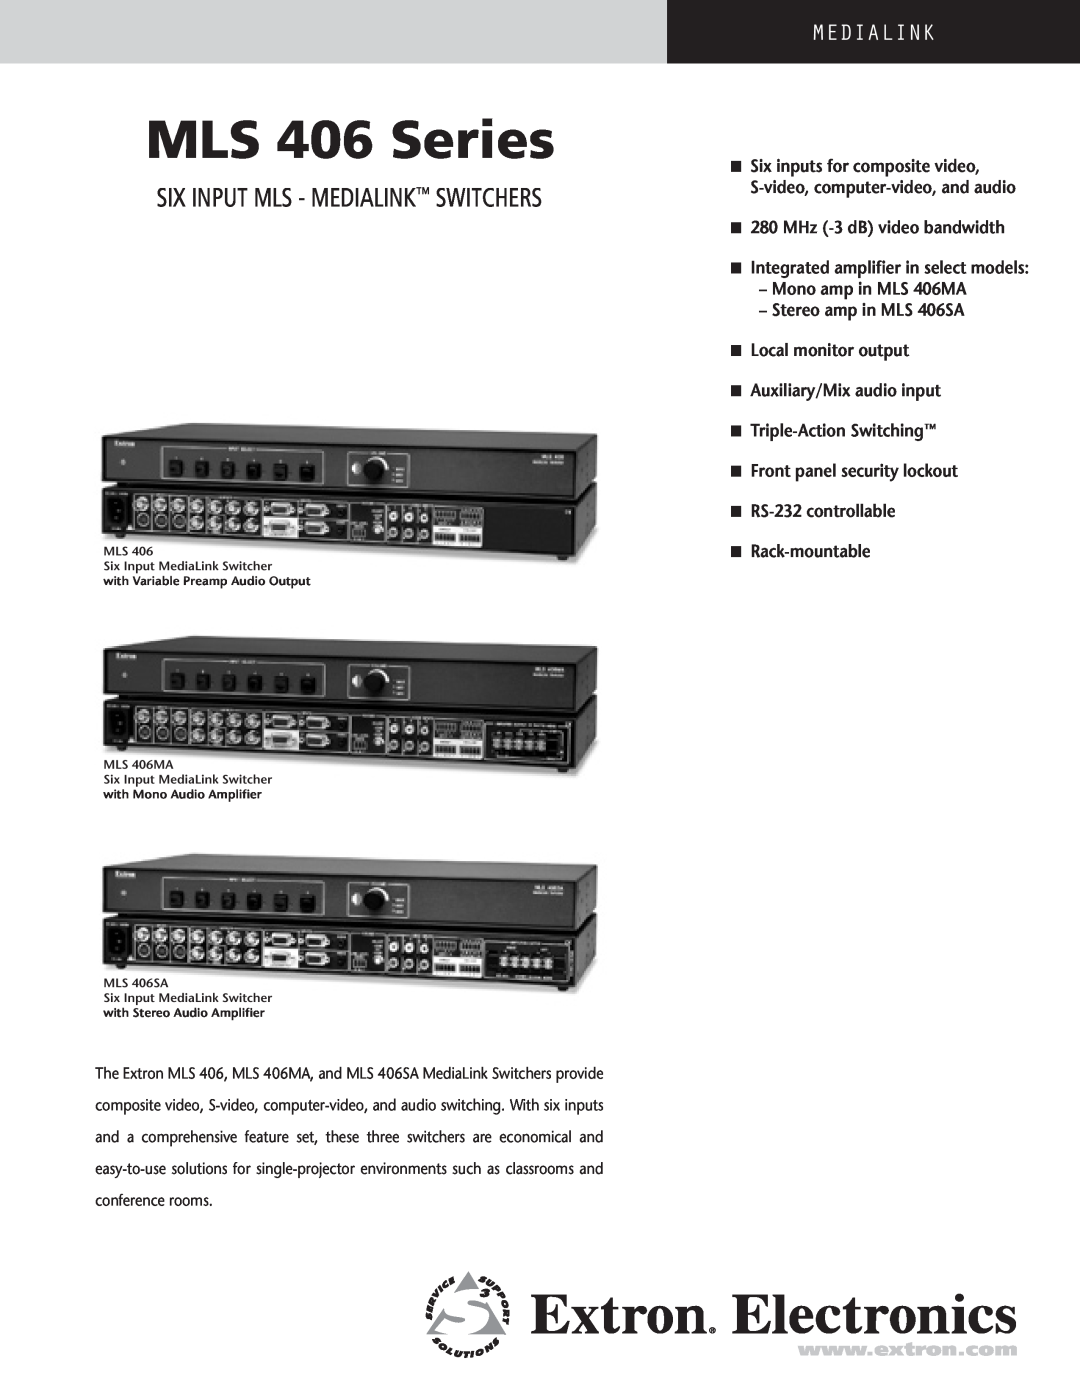 Extron electronic MLS 406 Series manual Six Input Mls - Medialink Switchers, n 280 MHz -3 dB video bandwidth 